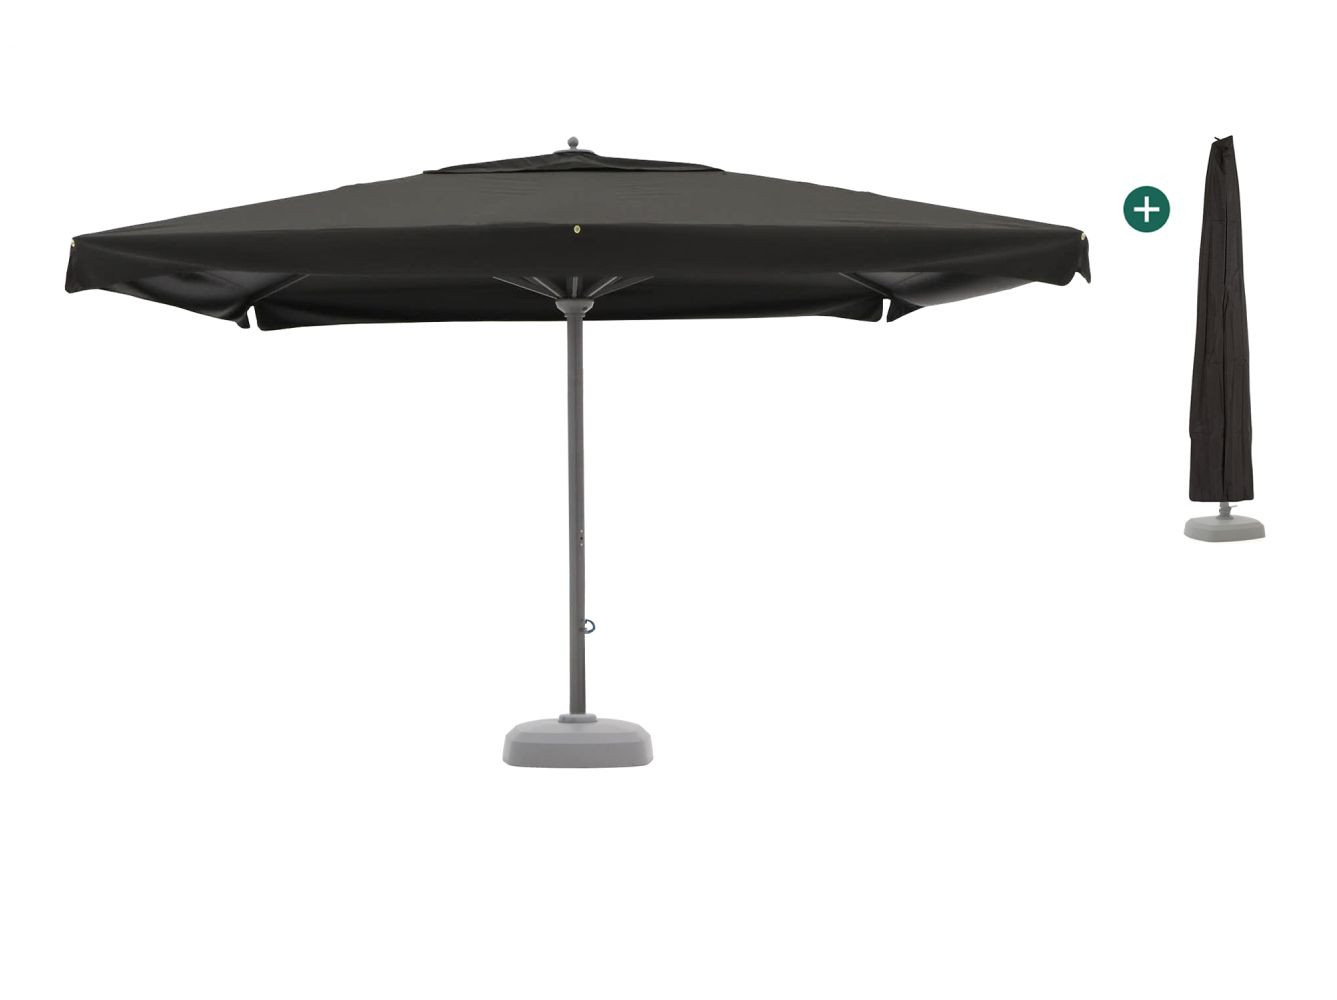 Shadowline Java parasol 400x400cm - Laagste prijsgarantie!